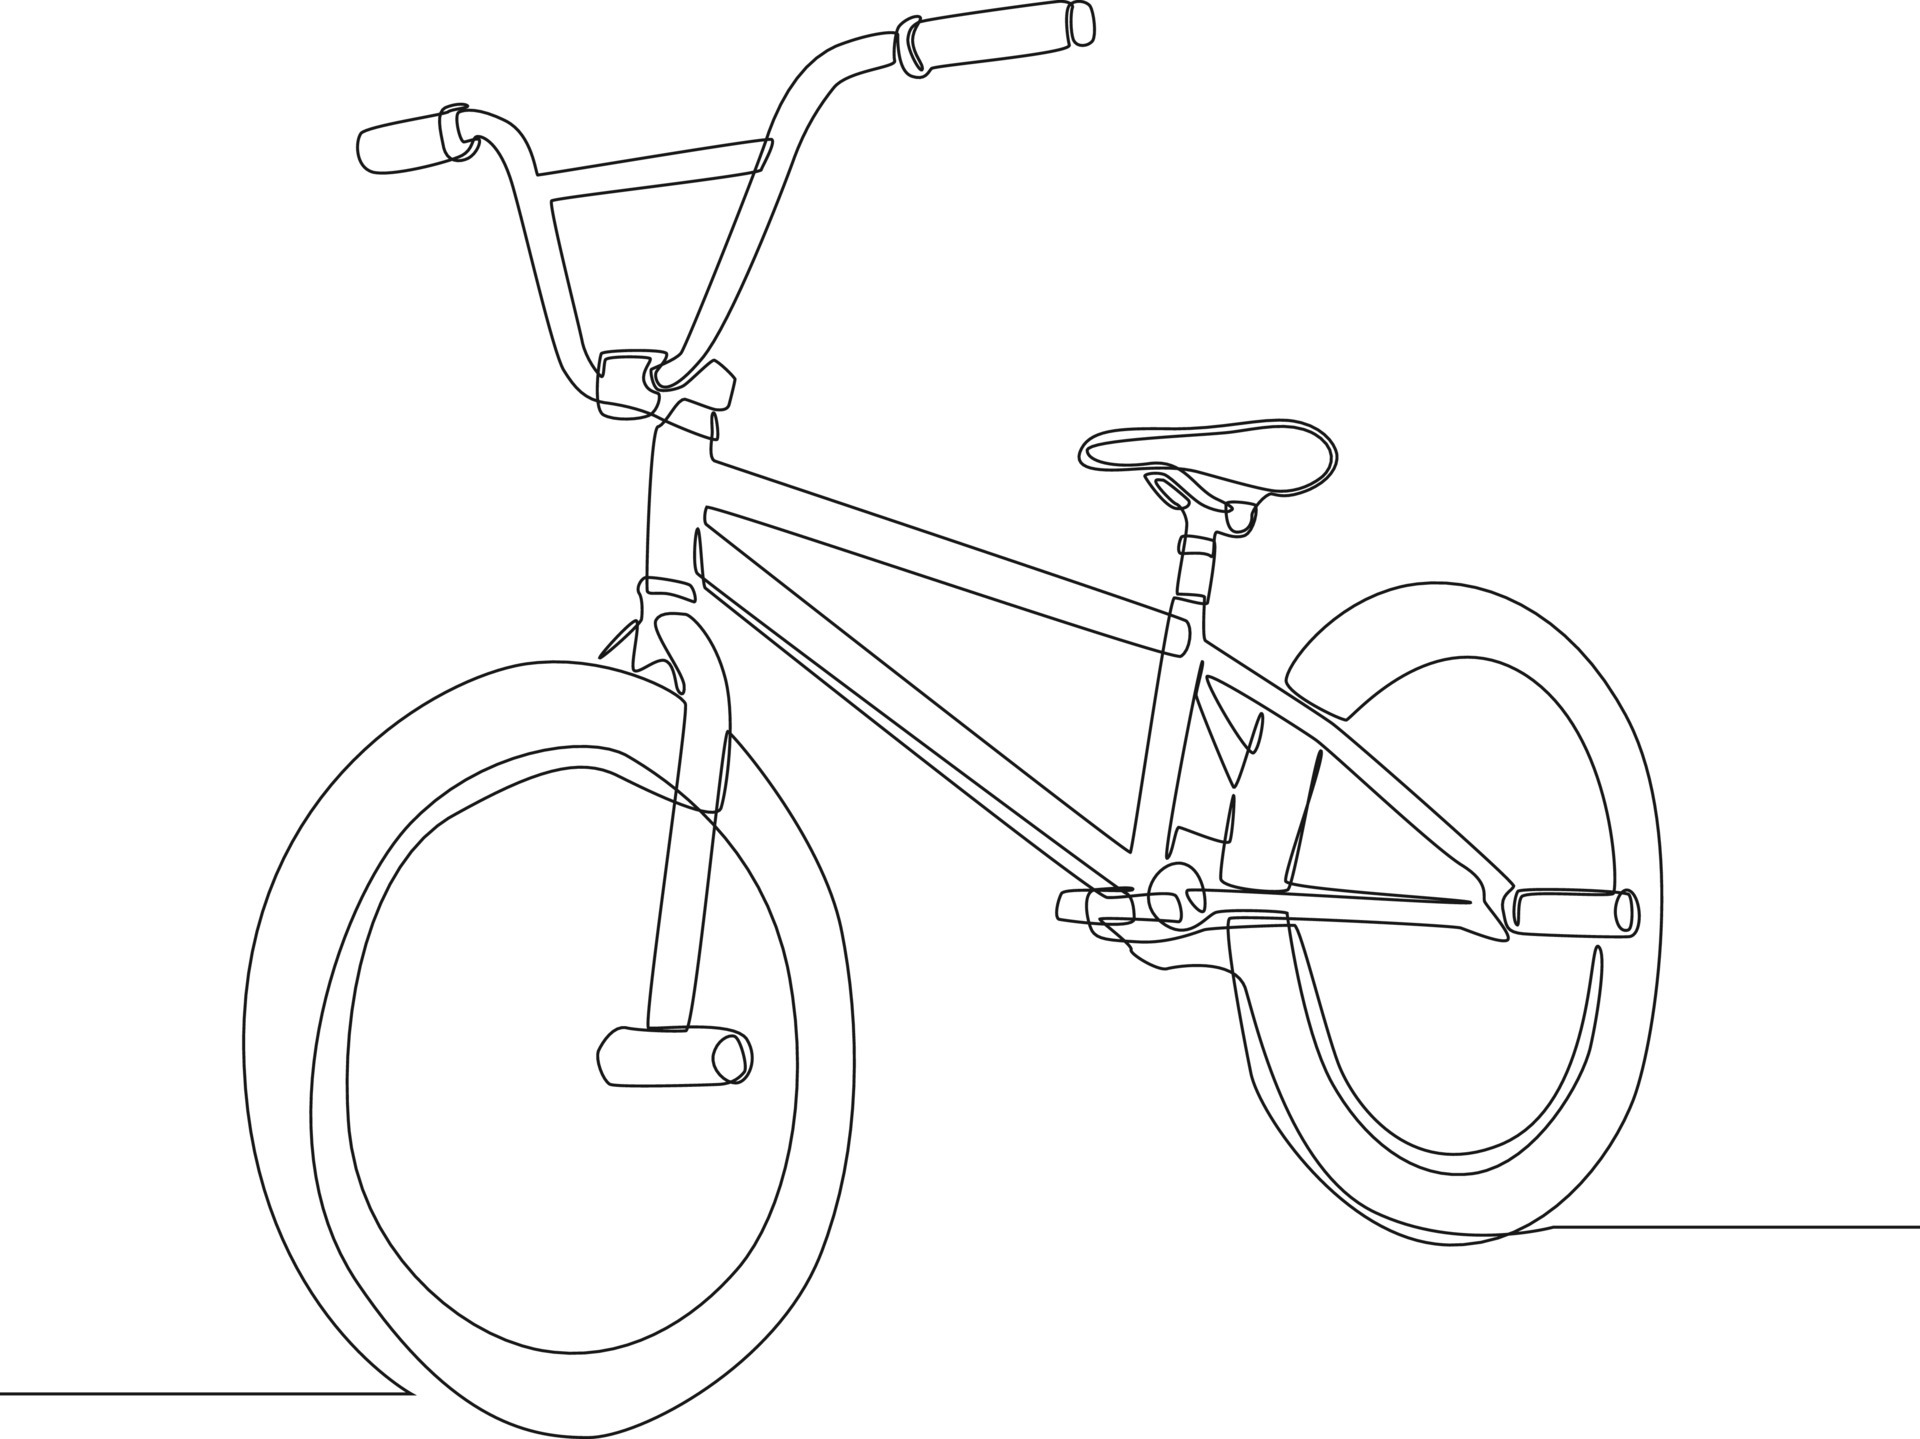 bicicleta bmx de dibujo de línea continua simple en fondo blanco.  ilustración vectorial 7104774 Vector en Vecteezy